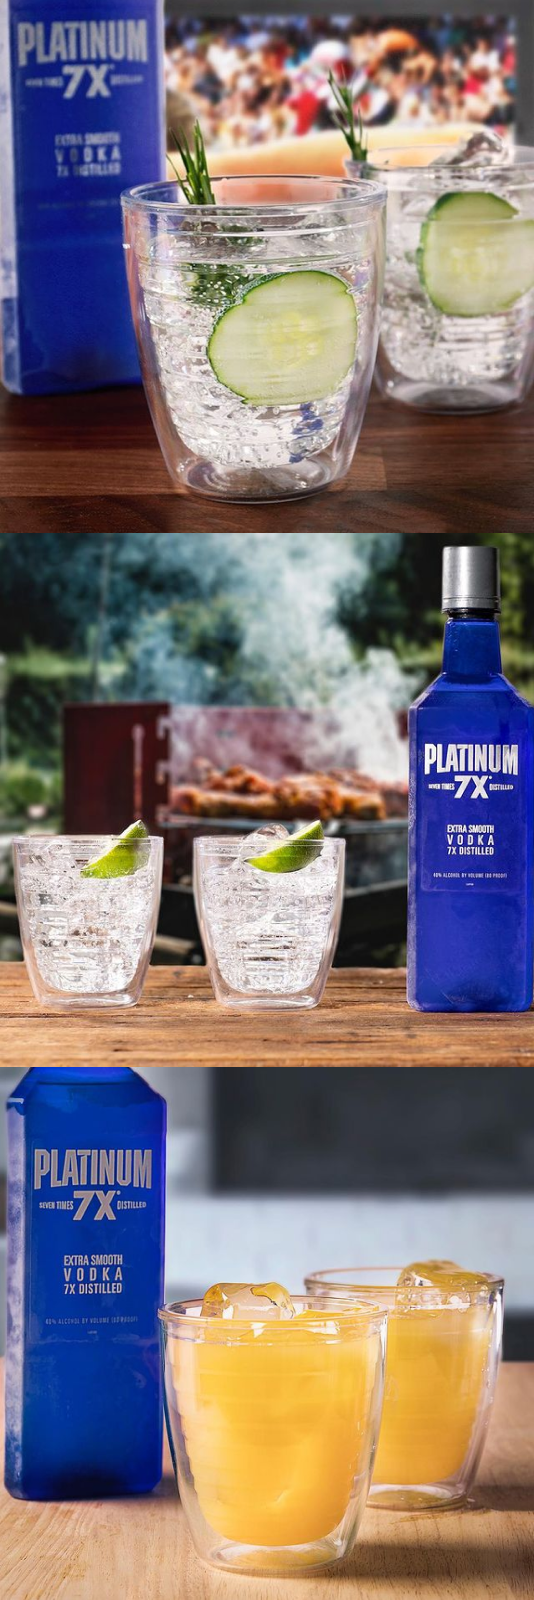 Platinum 7X vodka with cocktails